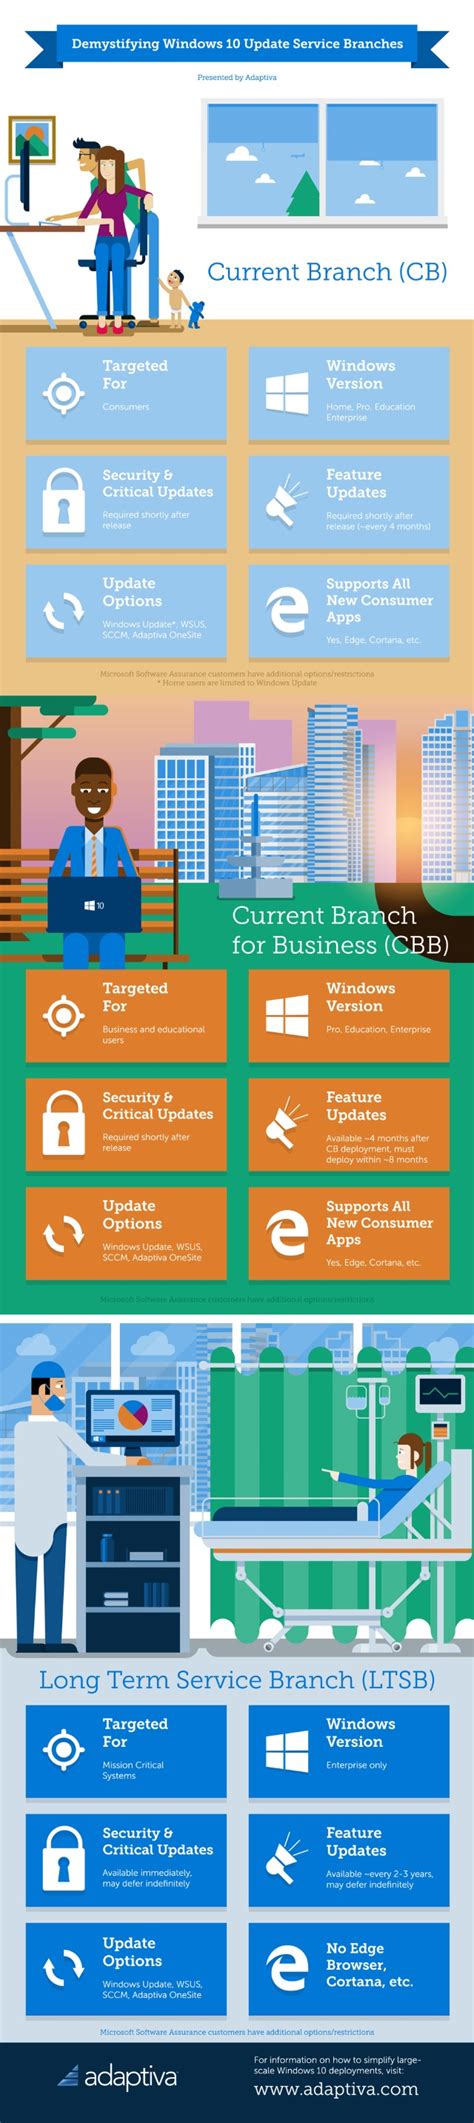 Understanding Windows 10 Update Options For Business